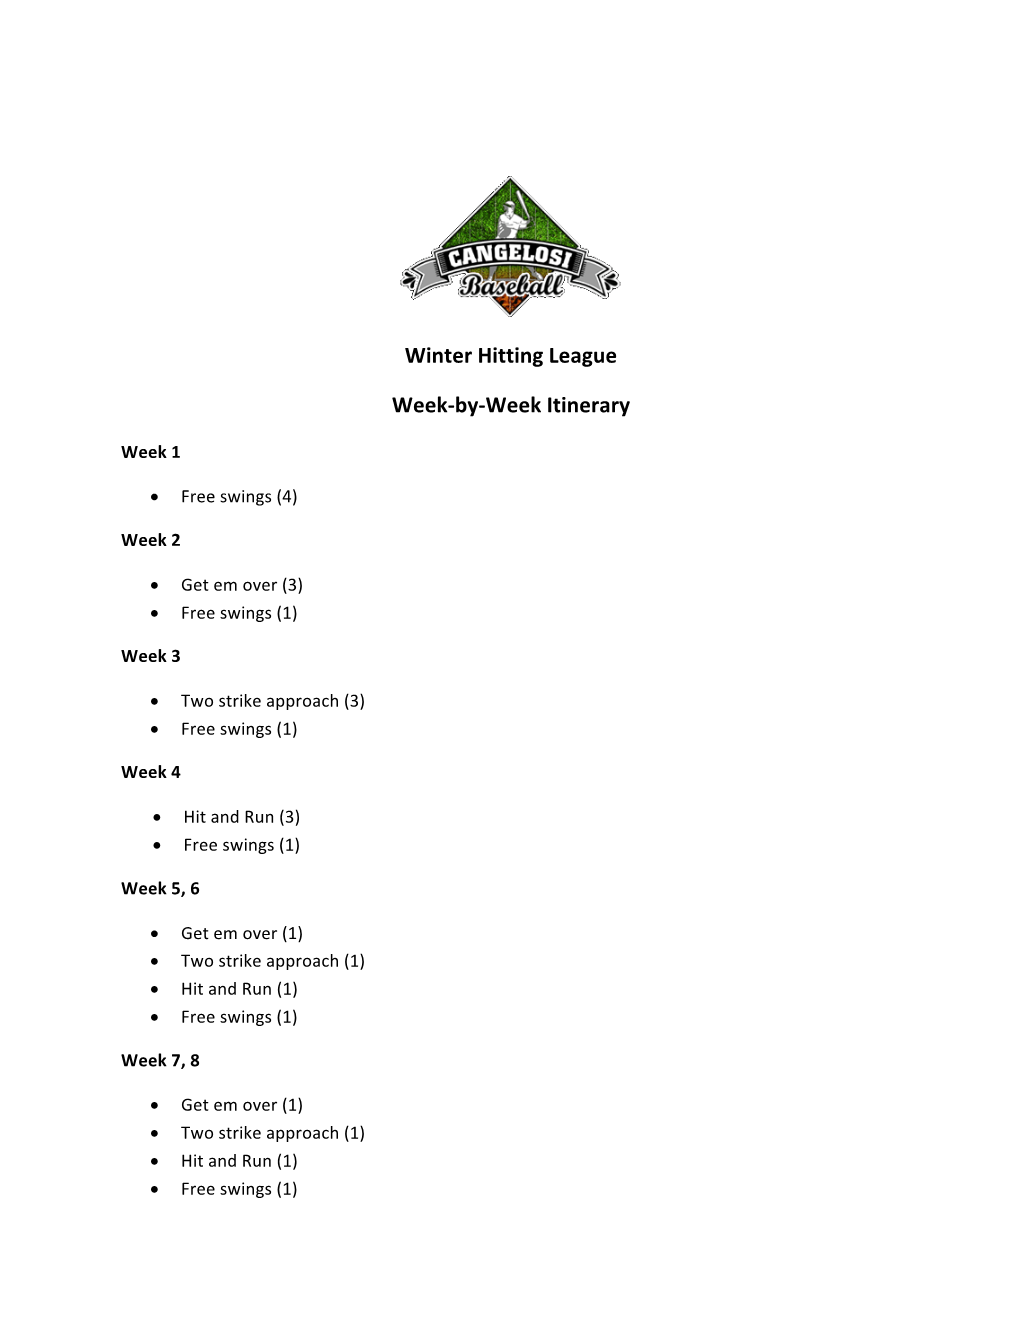 Winter Hitting League Week-By-Week Itinerary